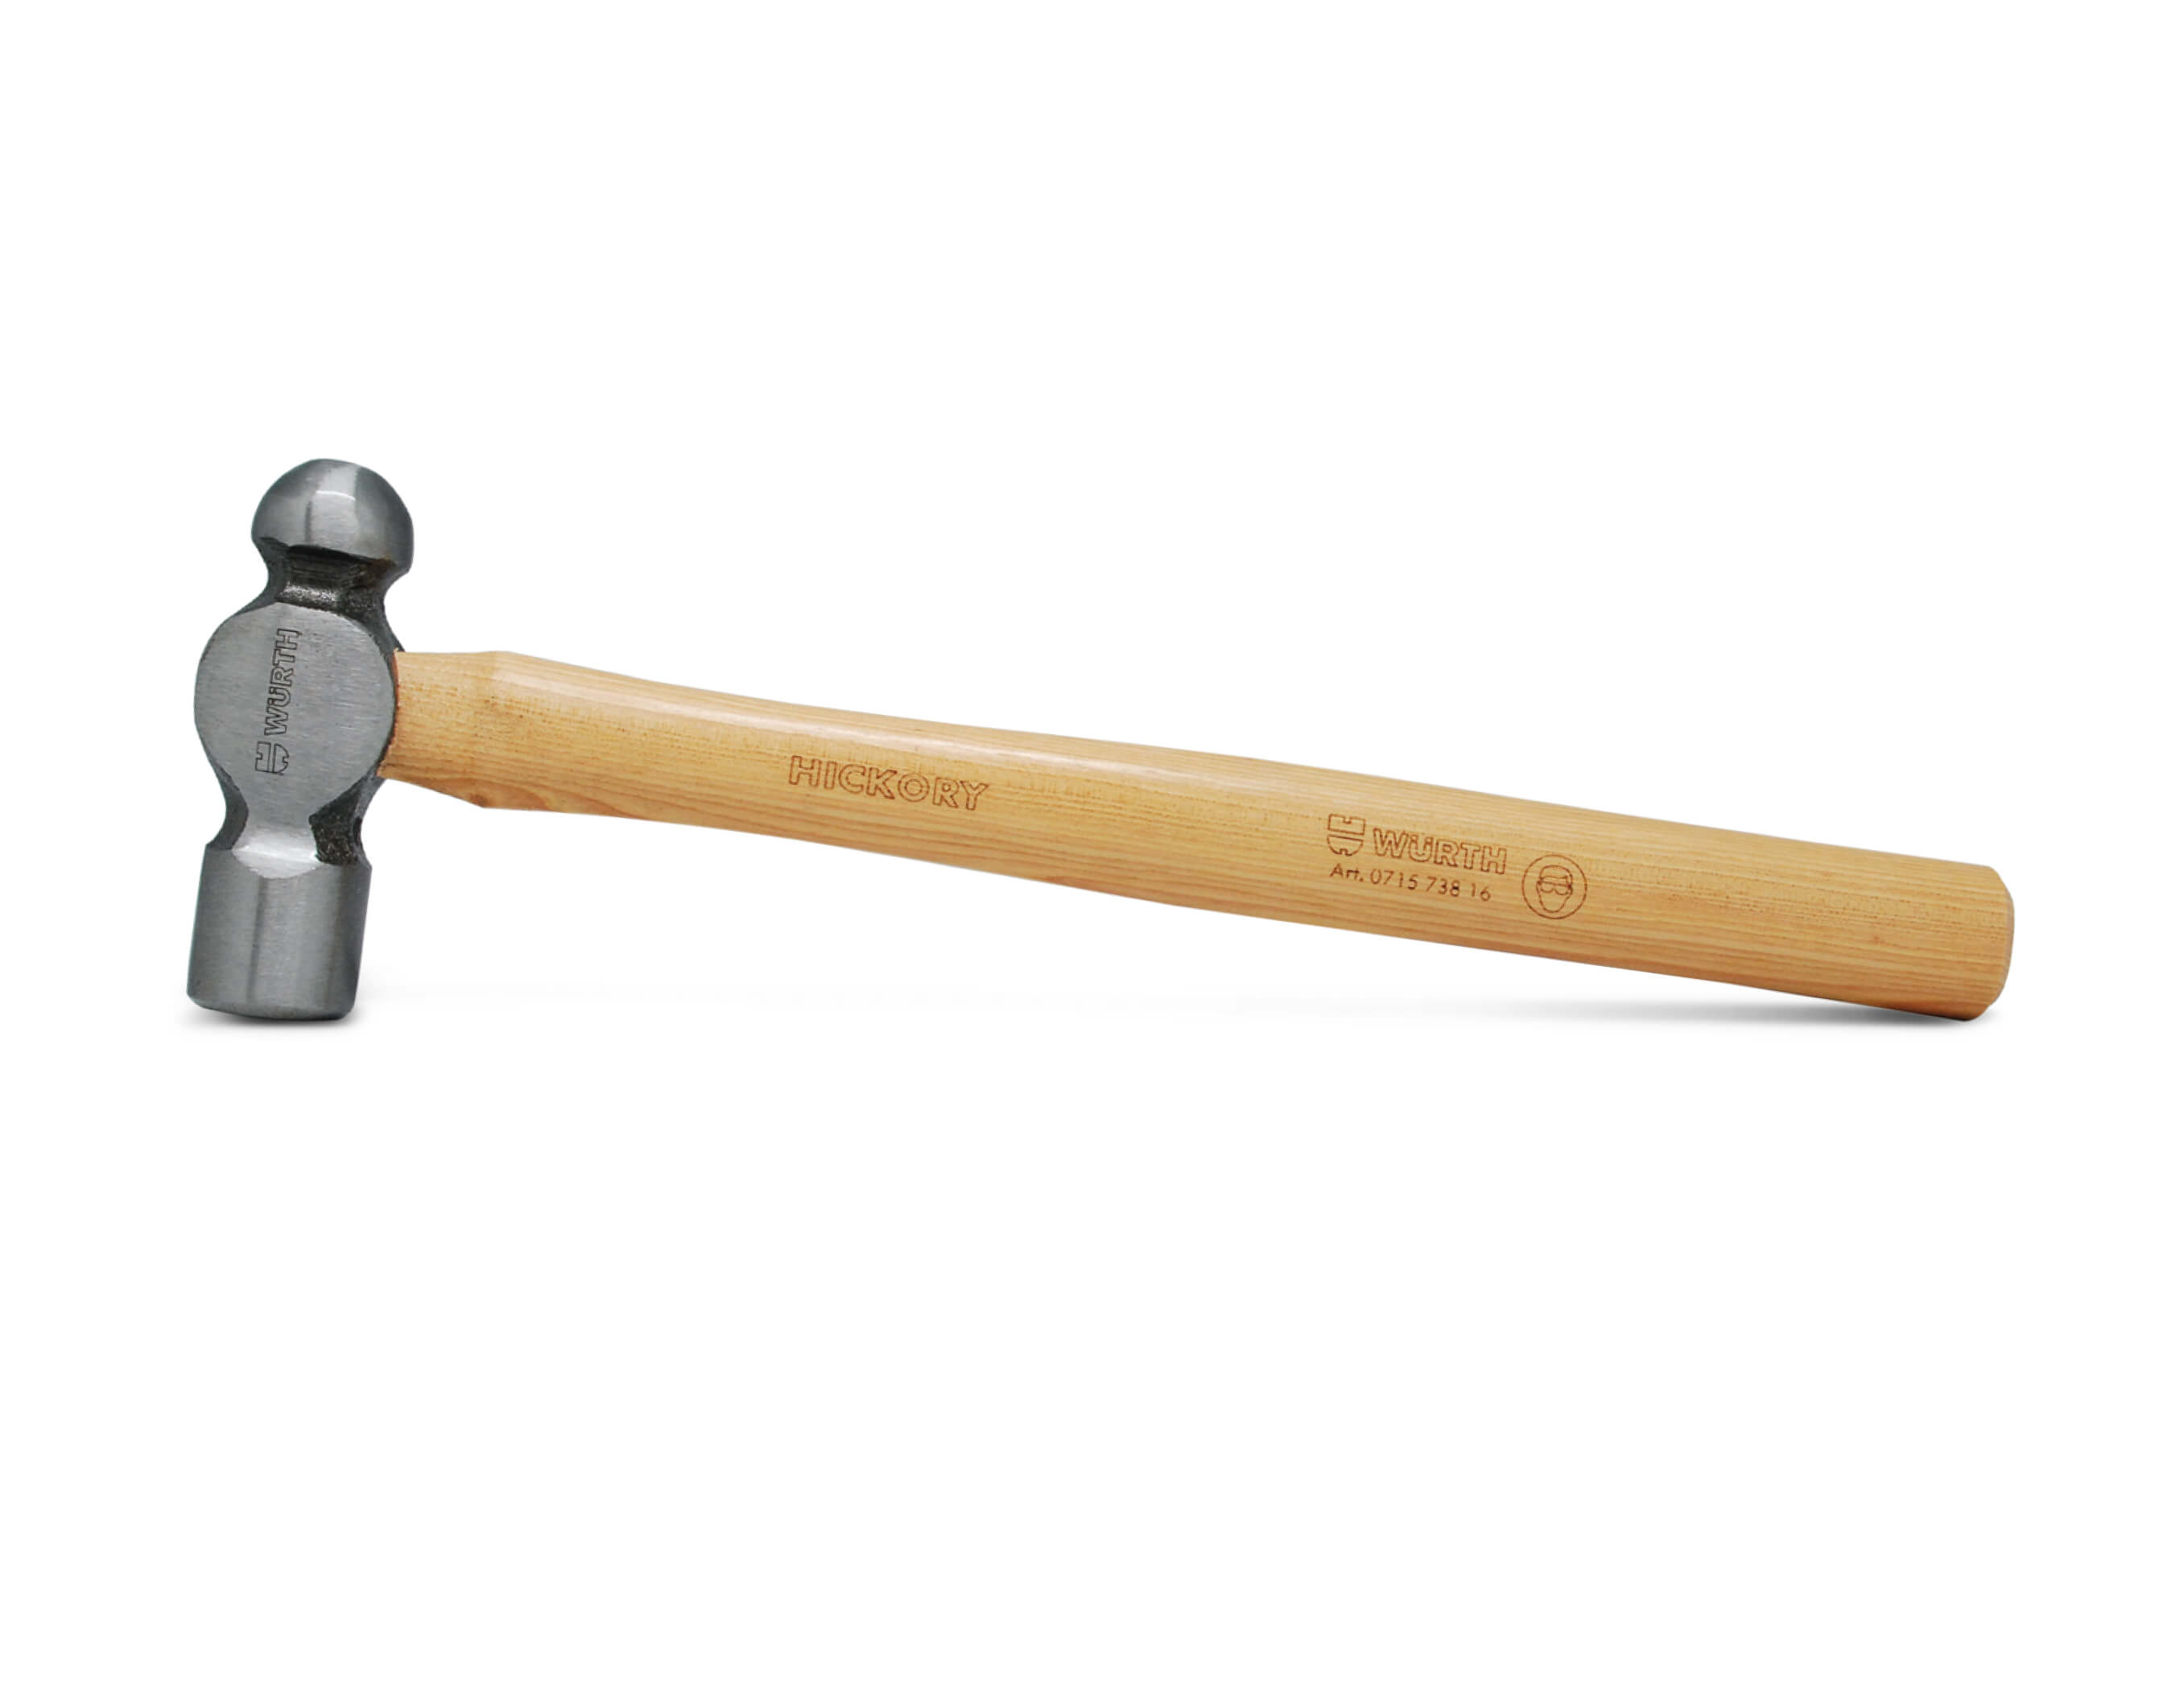 Ball Peen Hammer, 24oz, Hand Tools